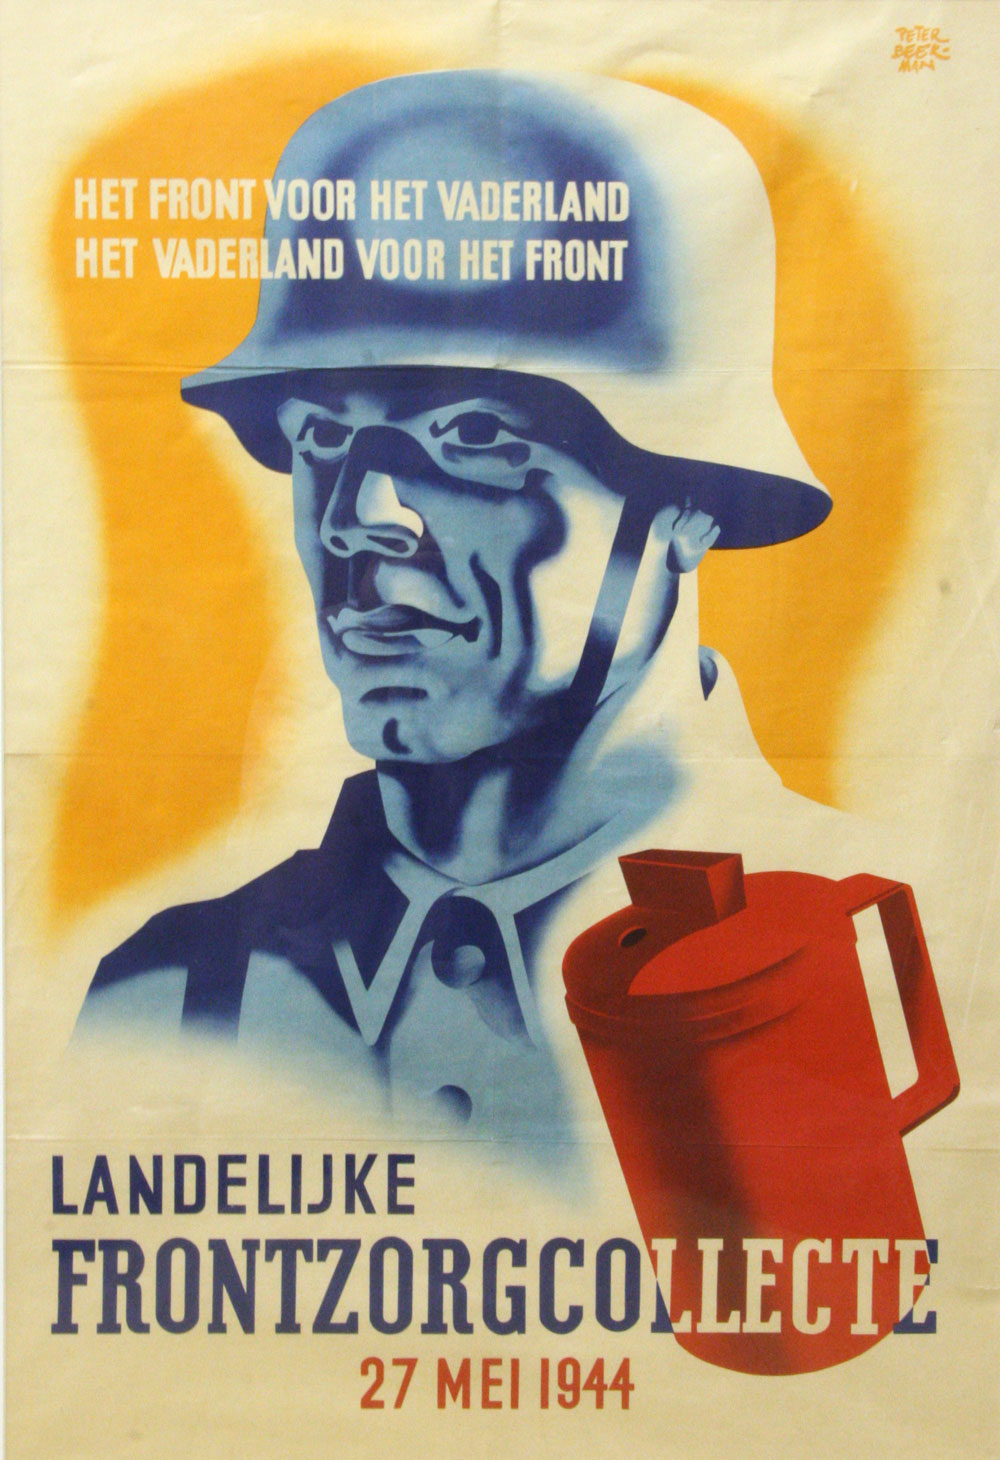 german propaganda posters world war 2